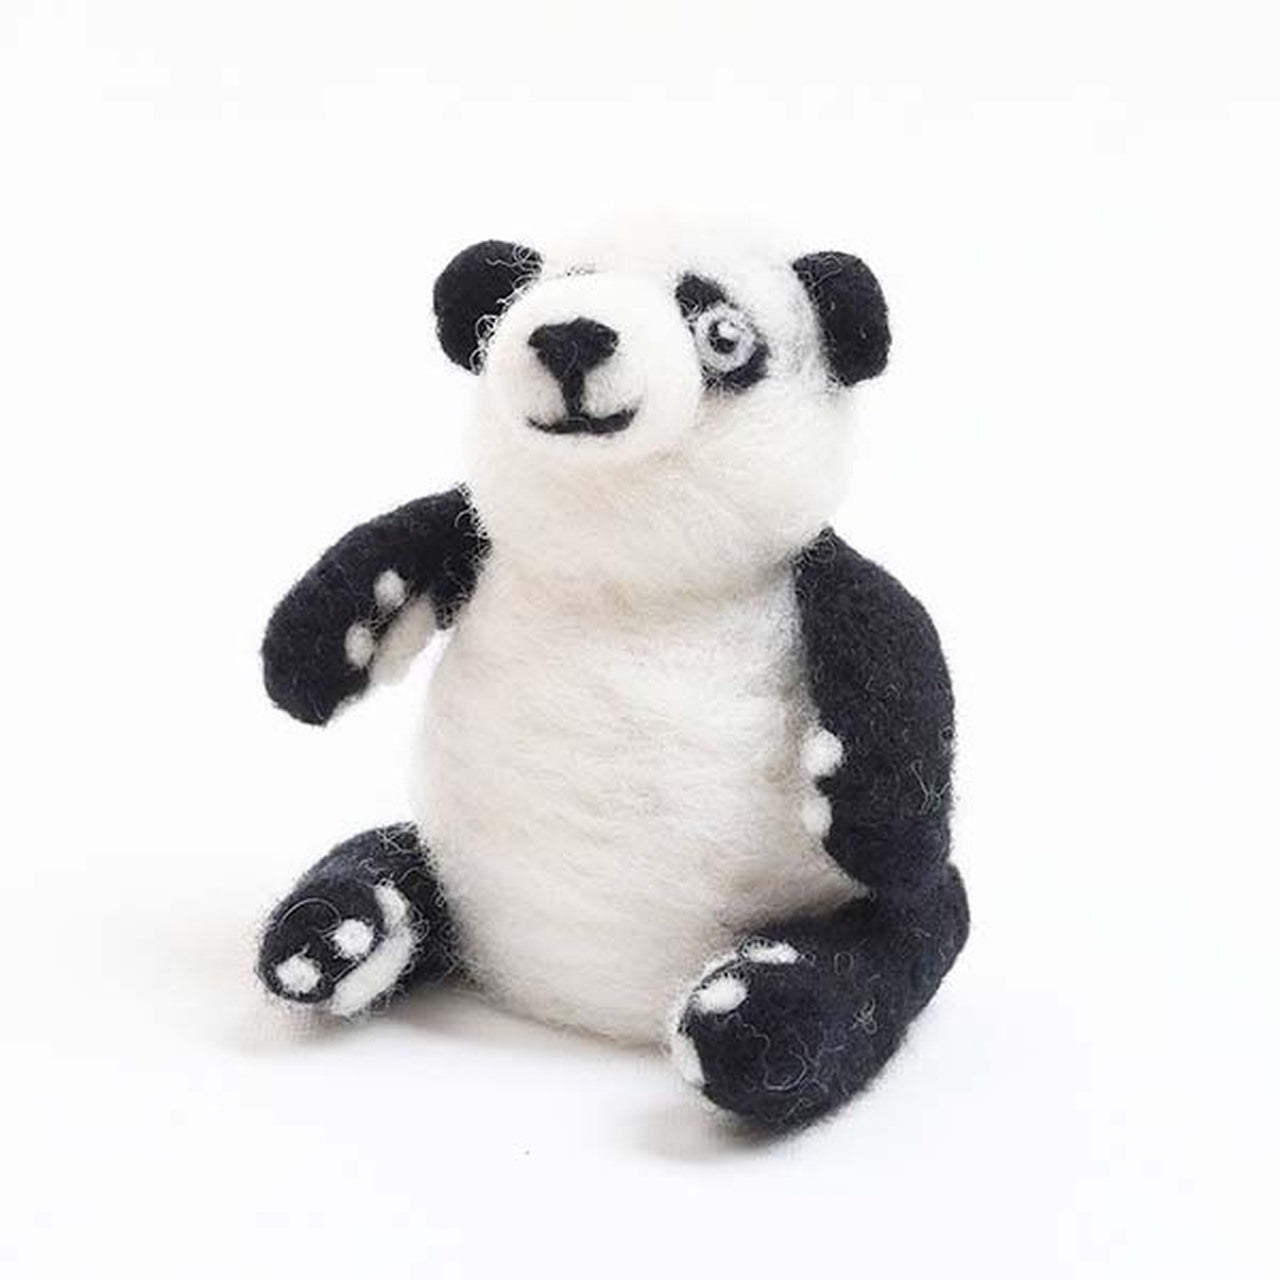 Panda Needle Felting Kit by Ashford